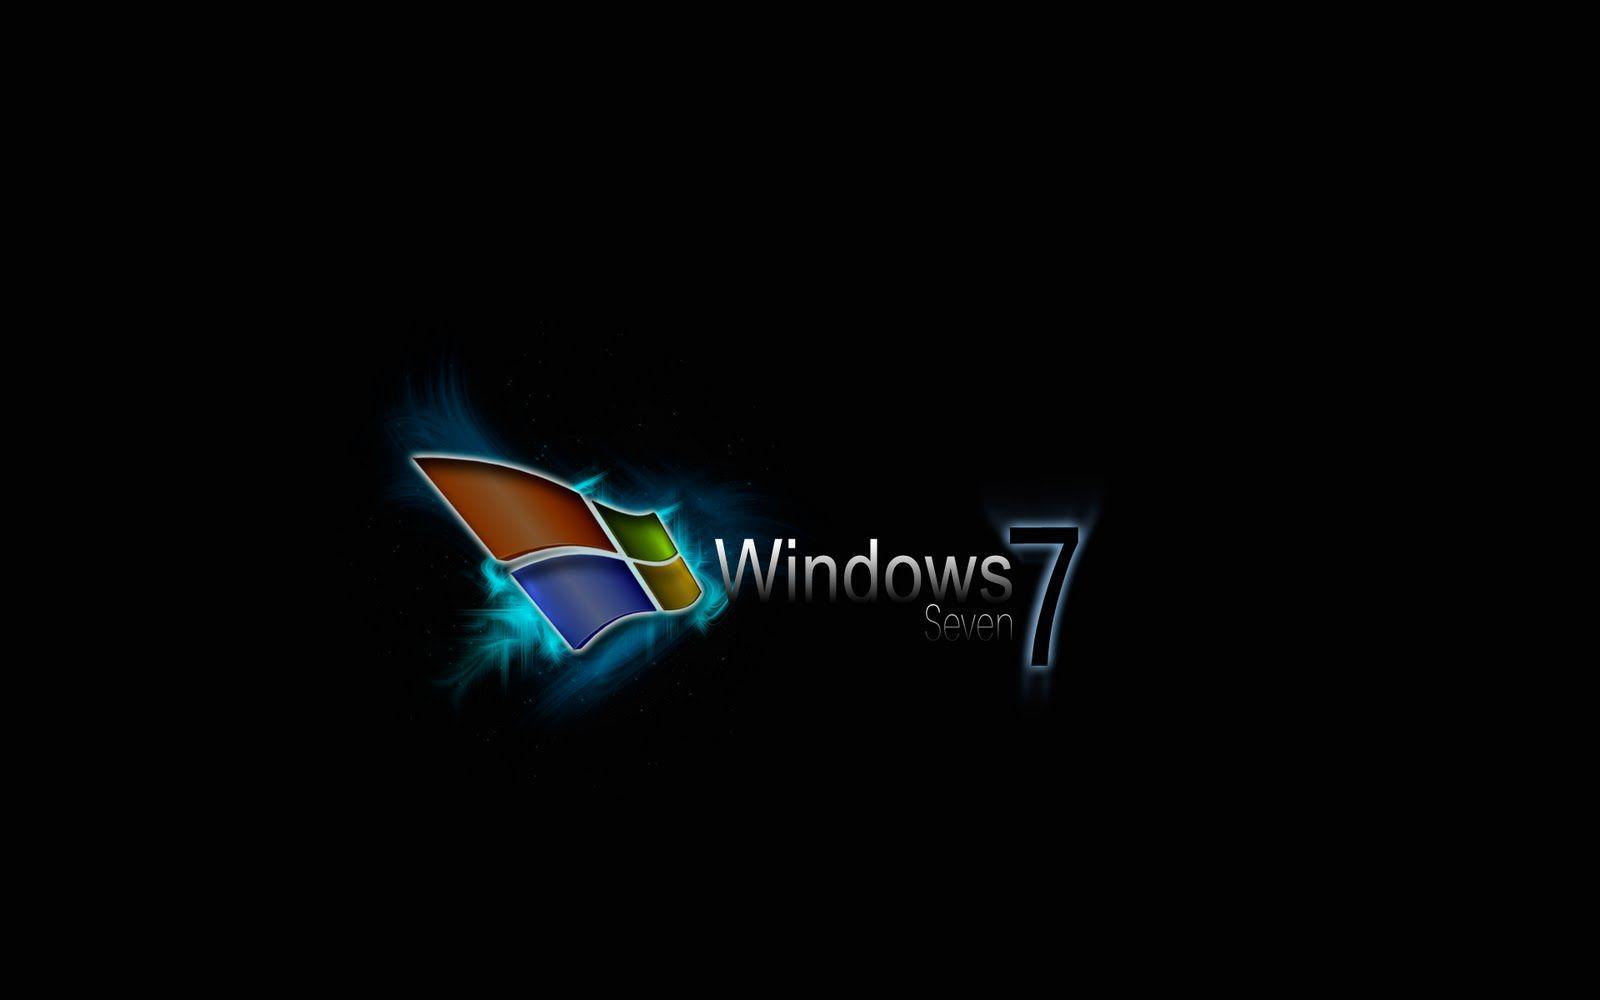 Windows 7 Professional Wallpaper HD